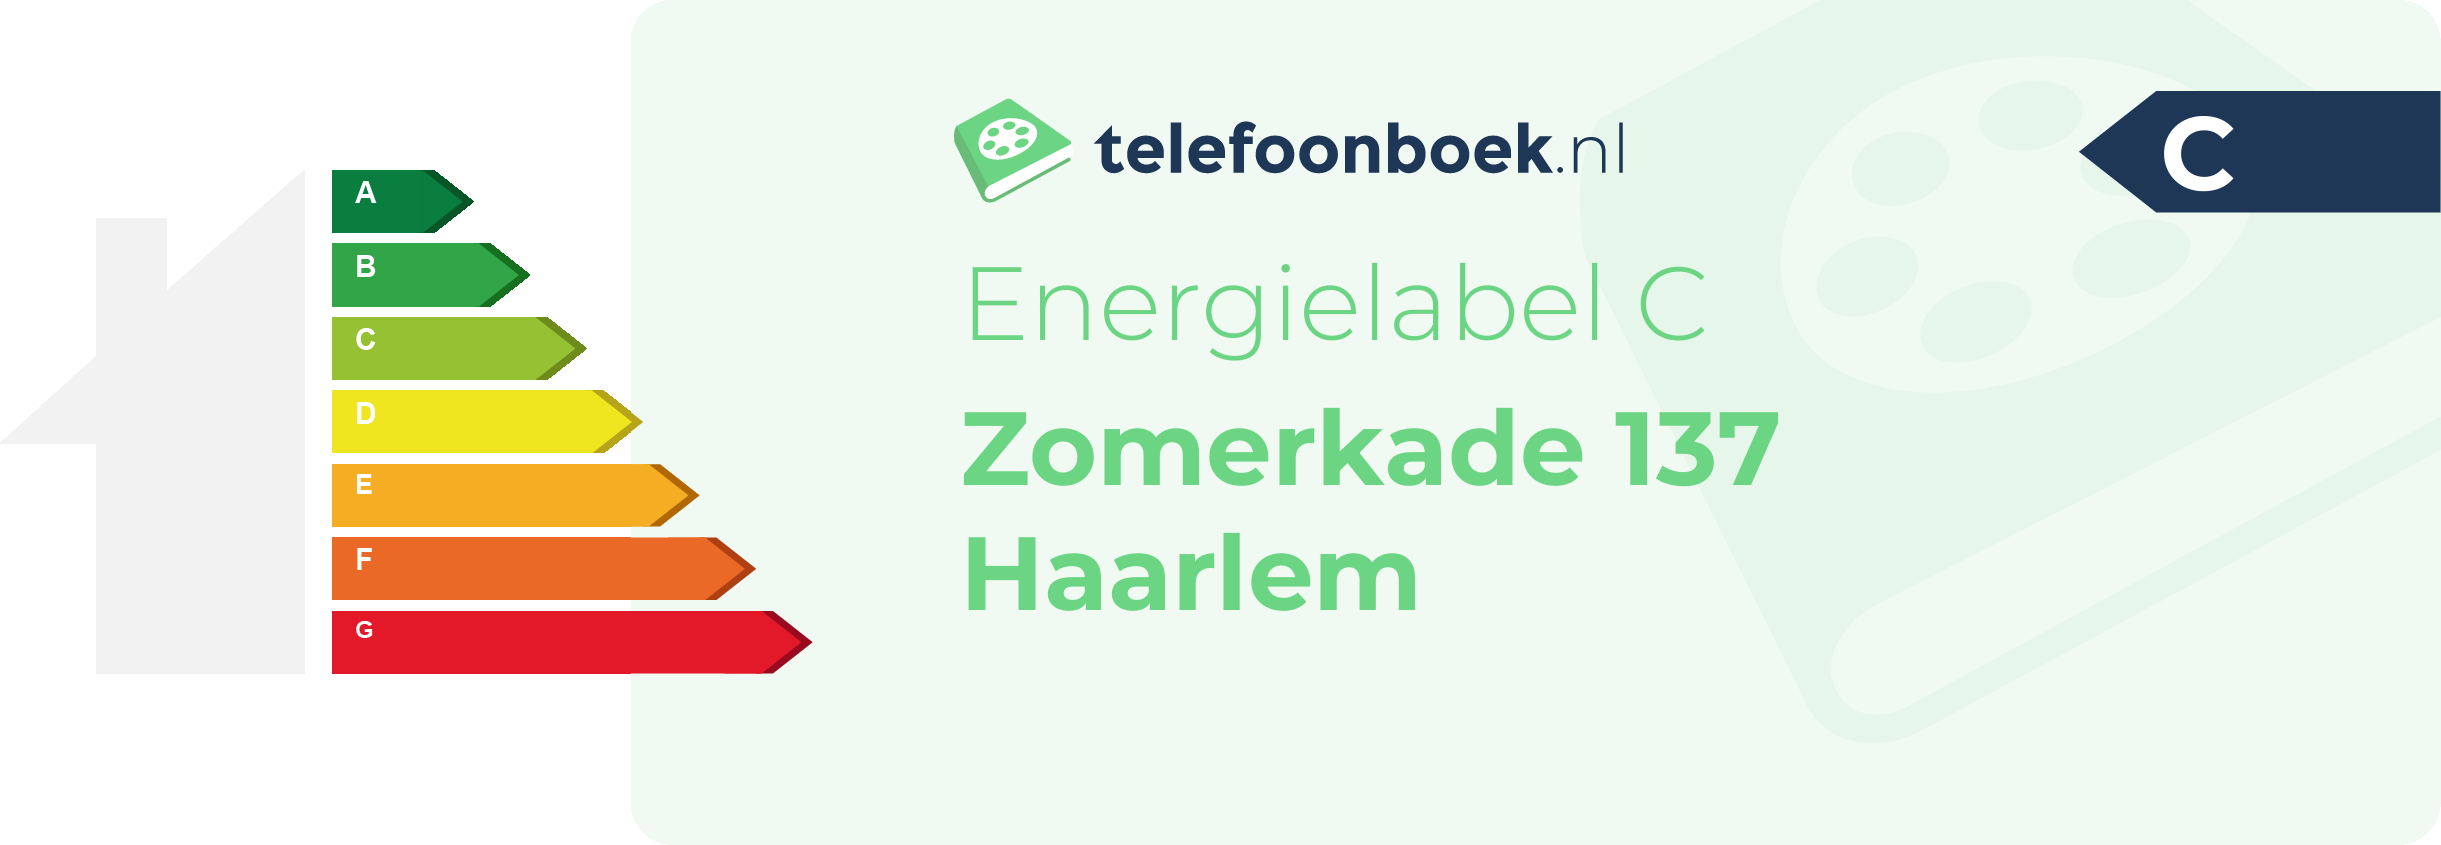 Energielabel Zomerkade 137 Haarlem